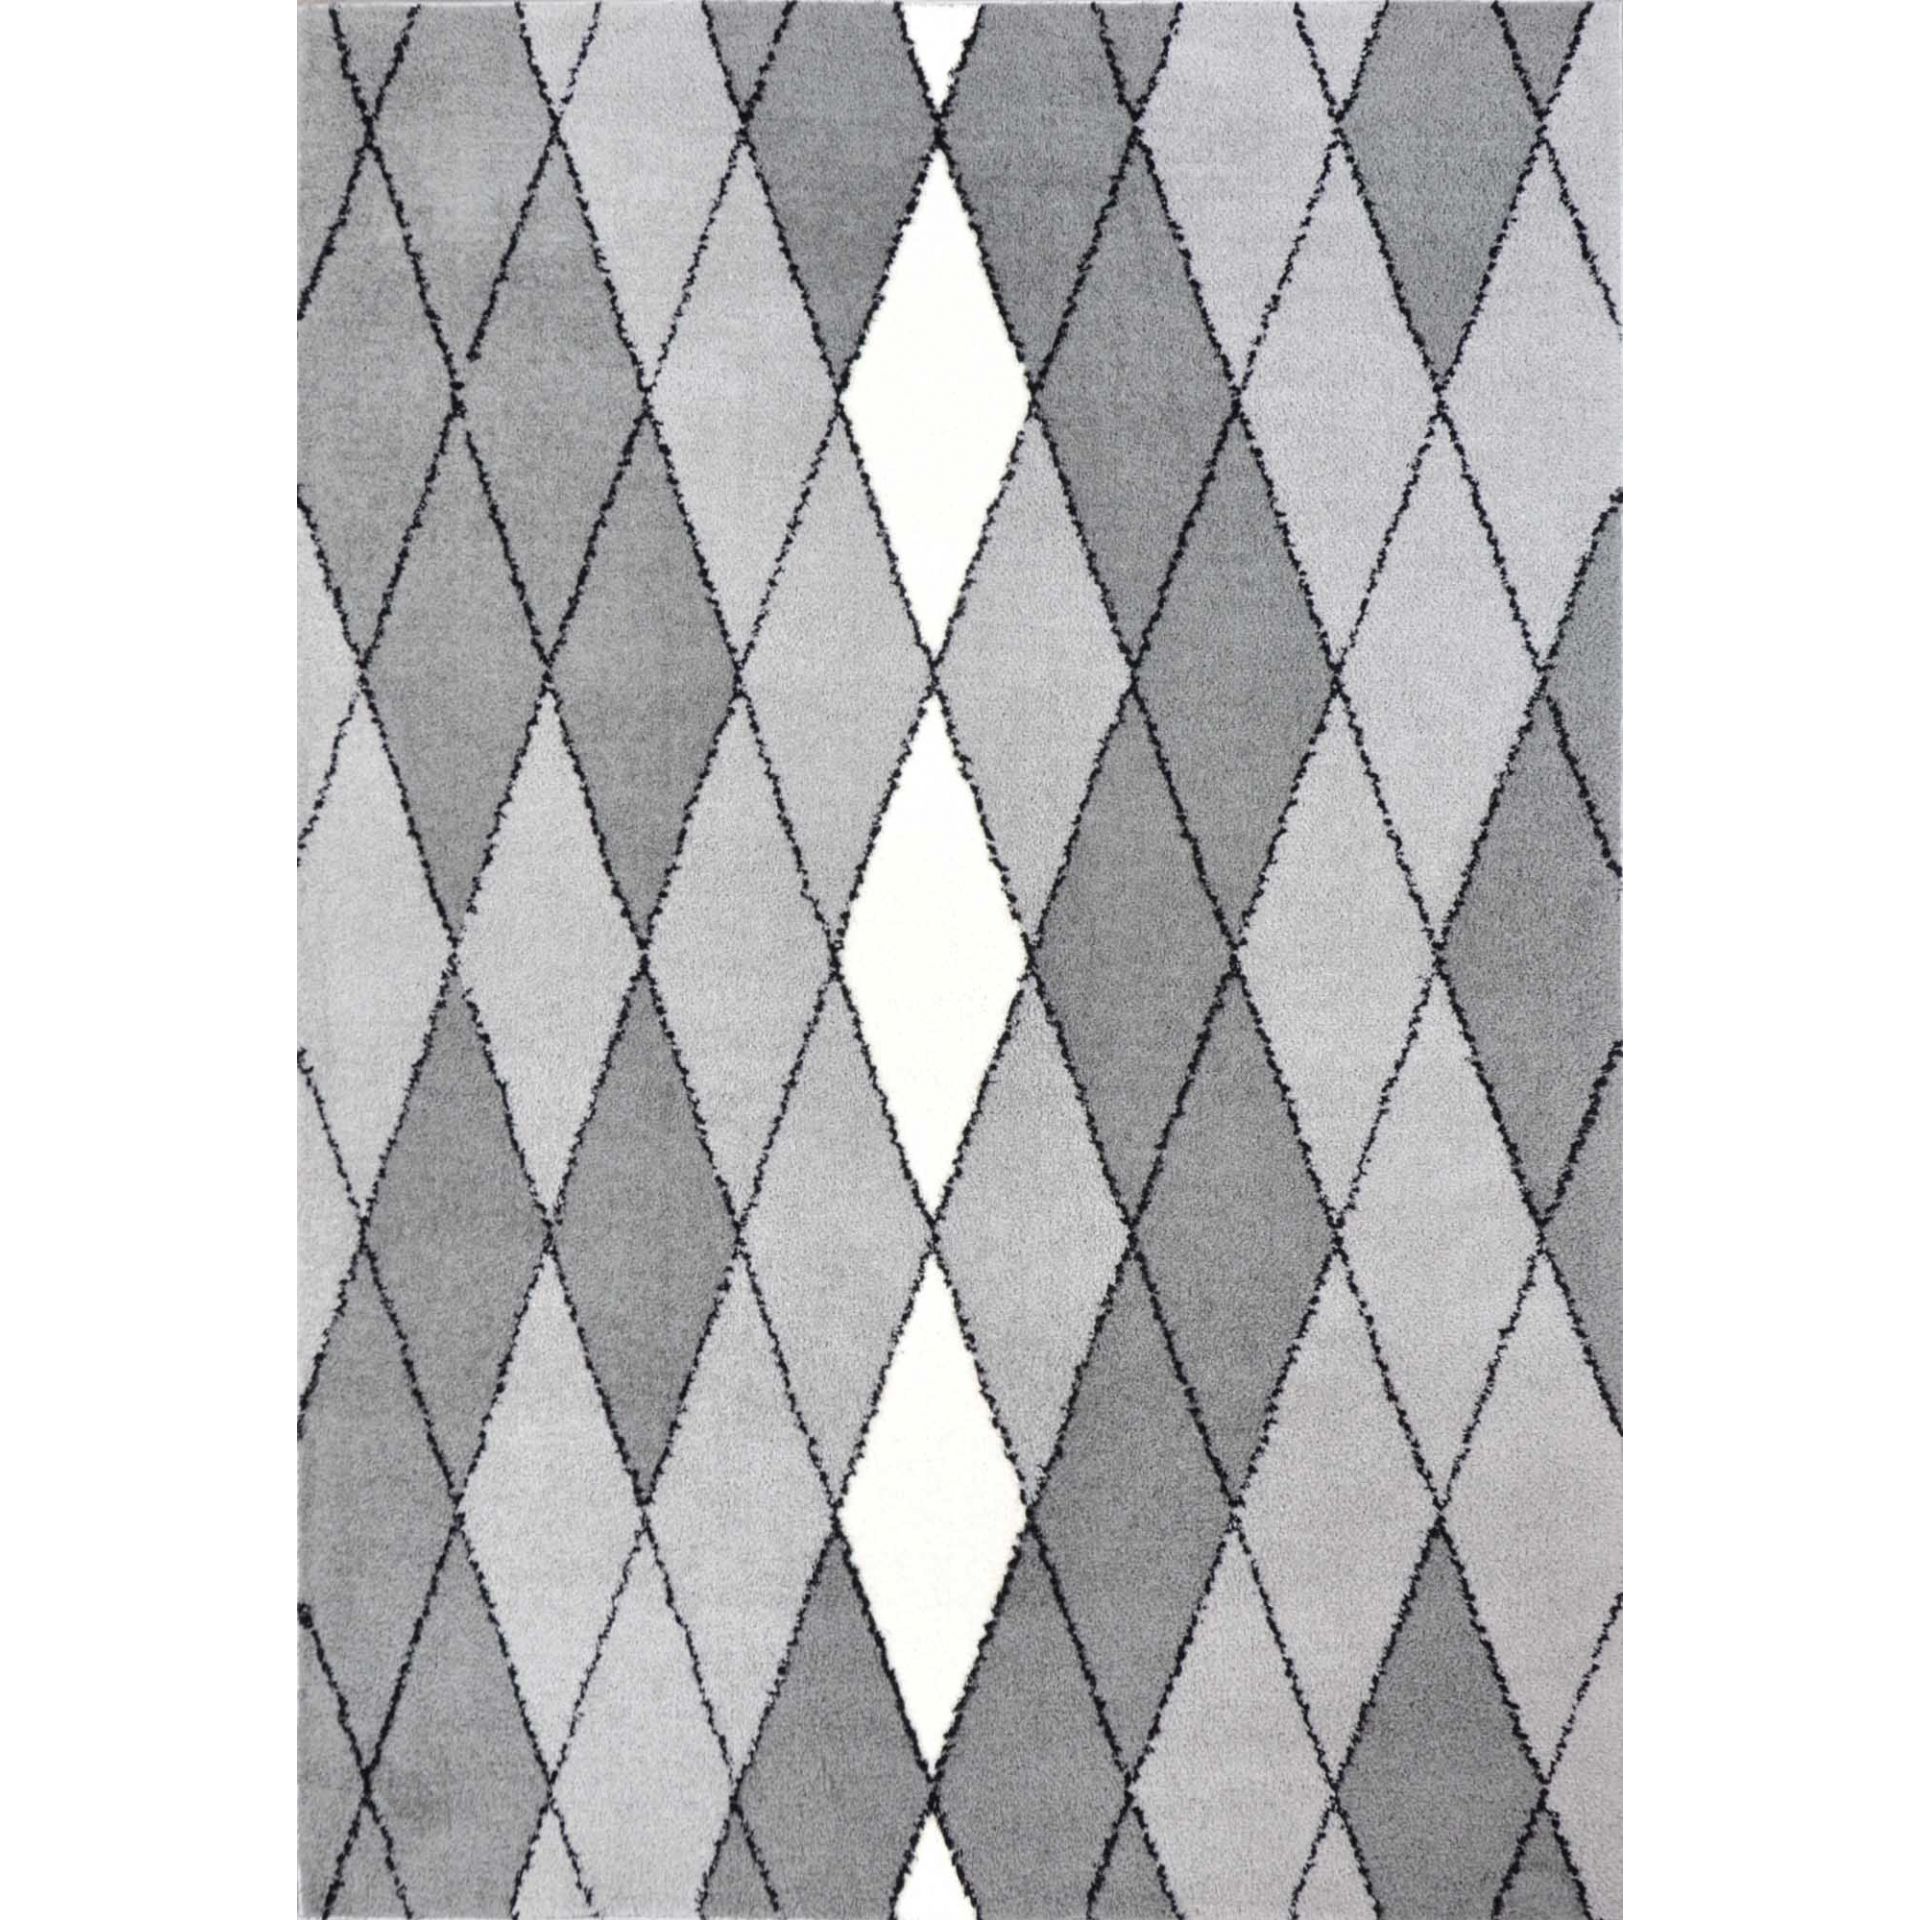 Detský koberec SLIM 8023 d.grey/d.grey, 120x160 cm